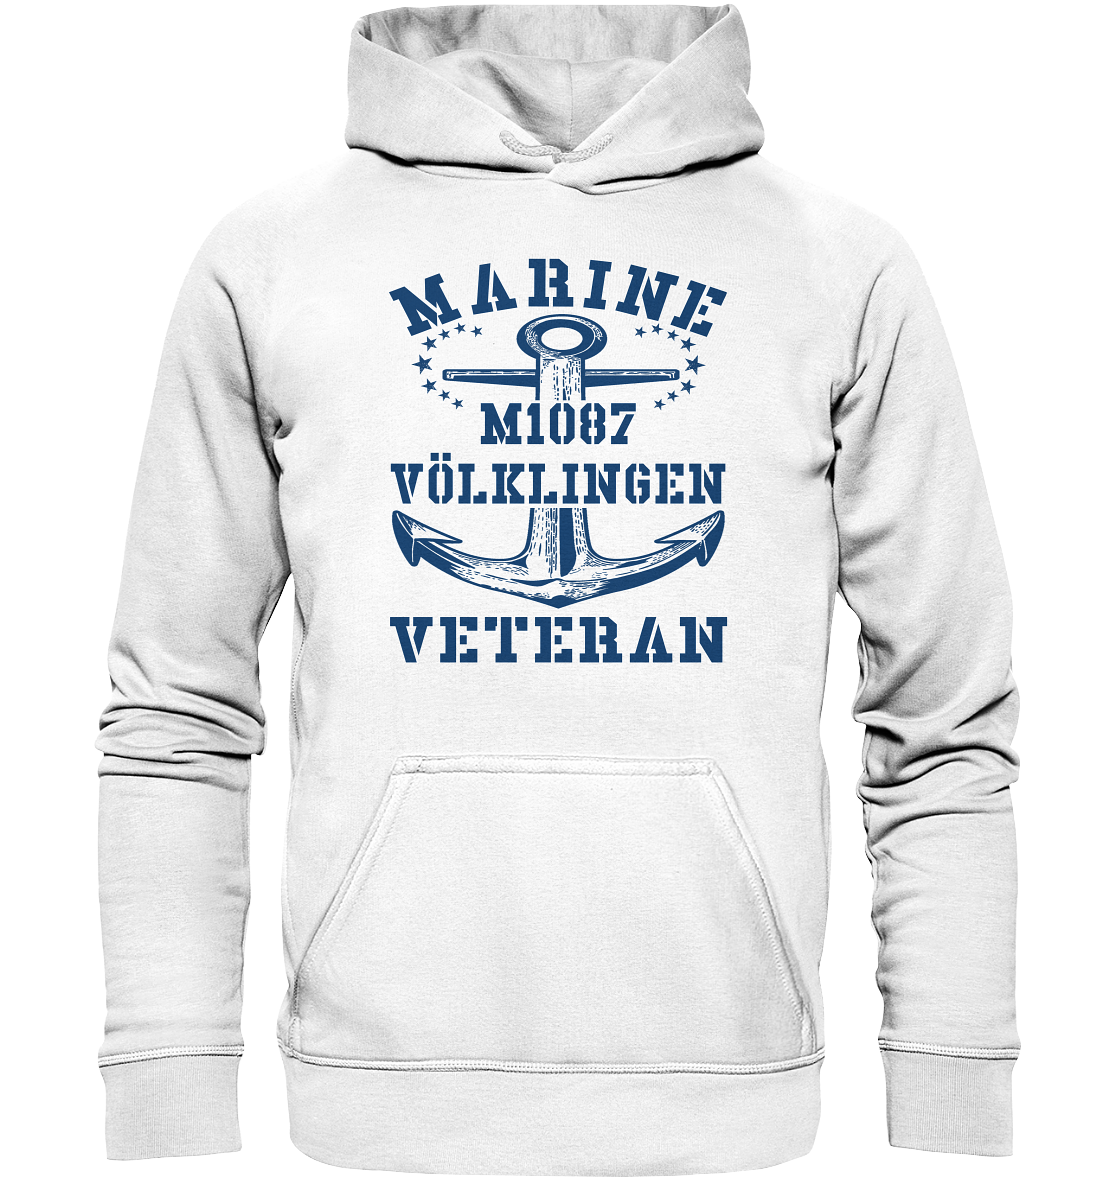 Marine Veteran M1087 VÖLKLINGEN - Basic Unisex Hoodie